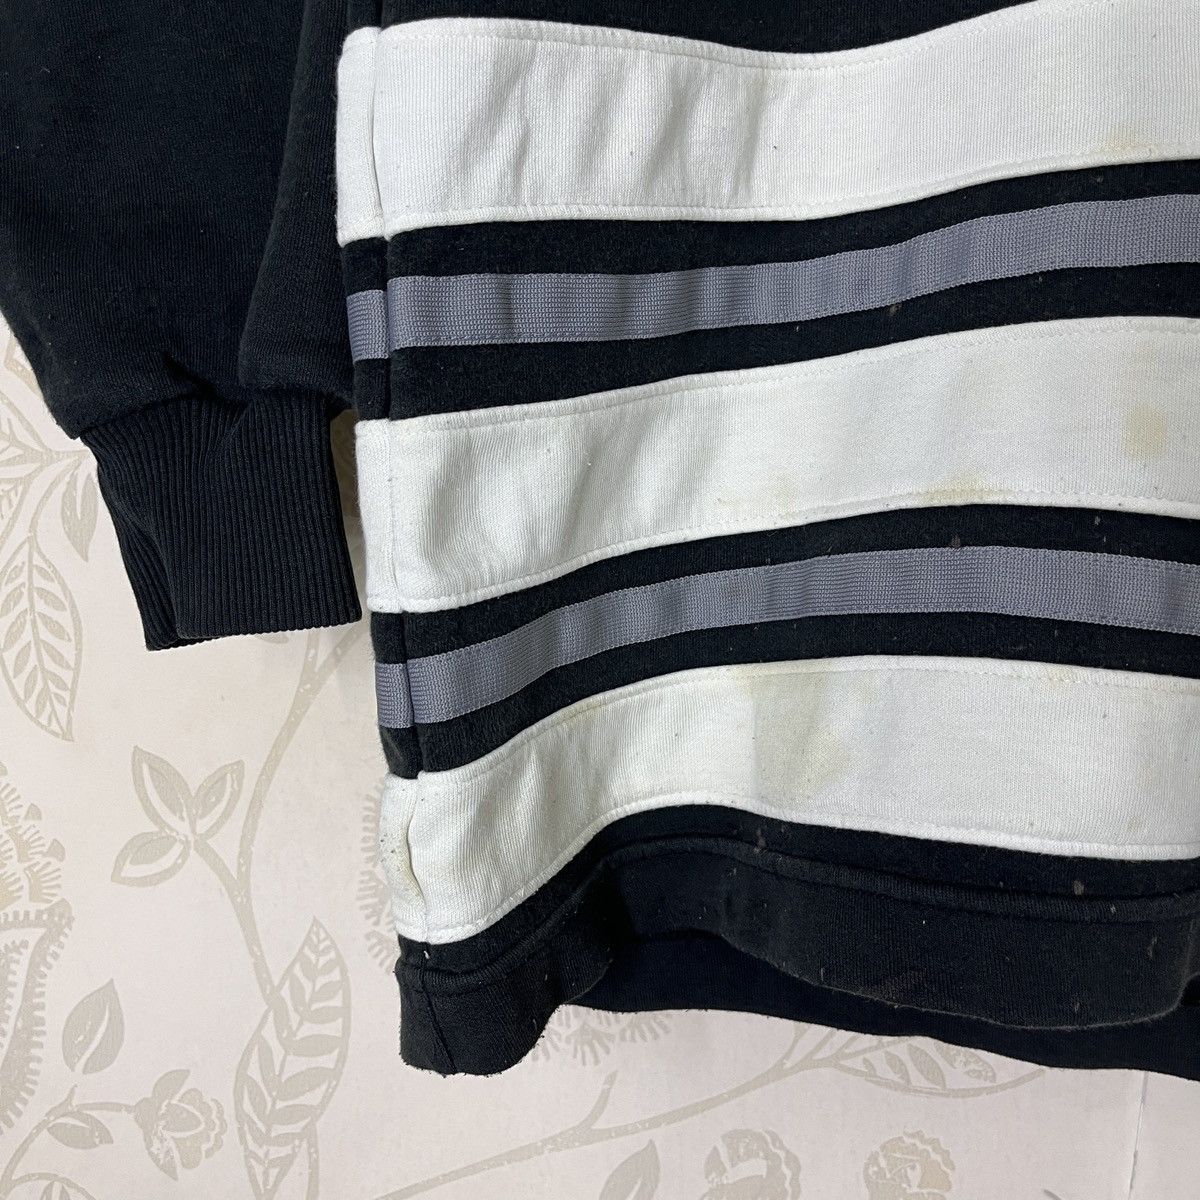 Super Rare Vintage Adidas 3 Stripes Descente Made In Japan - 13